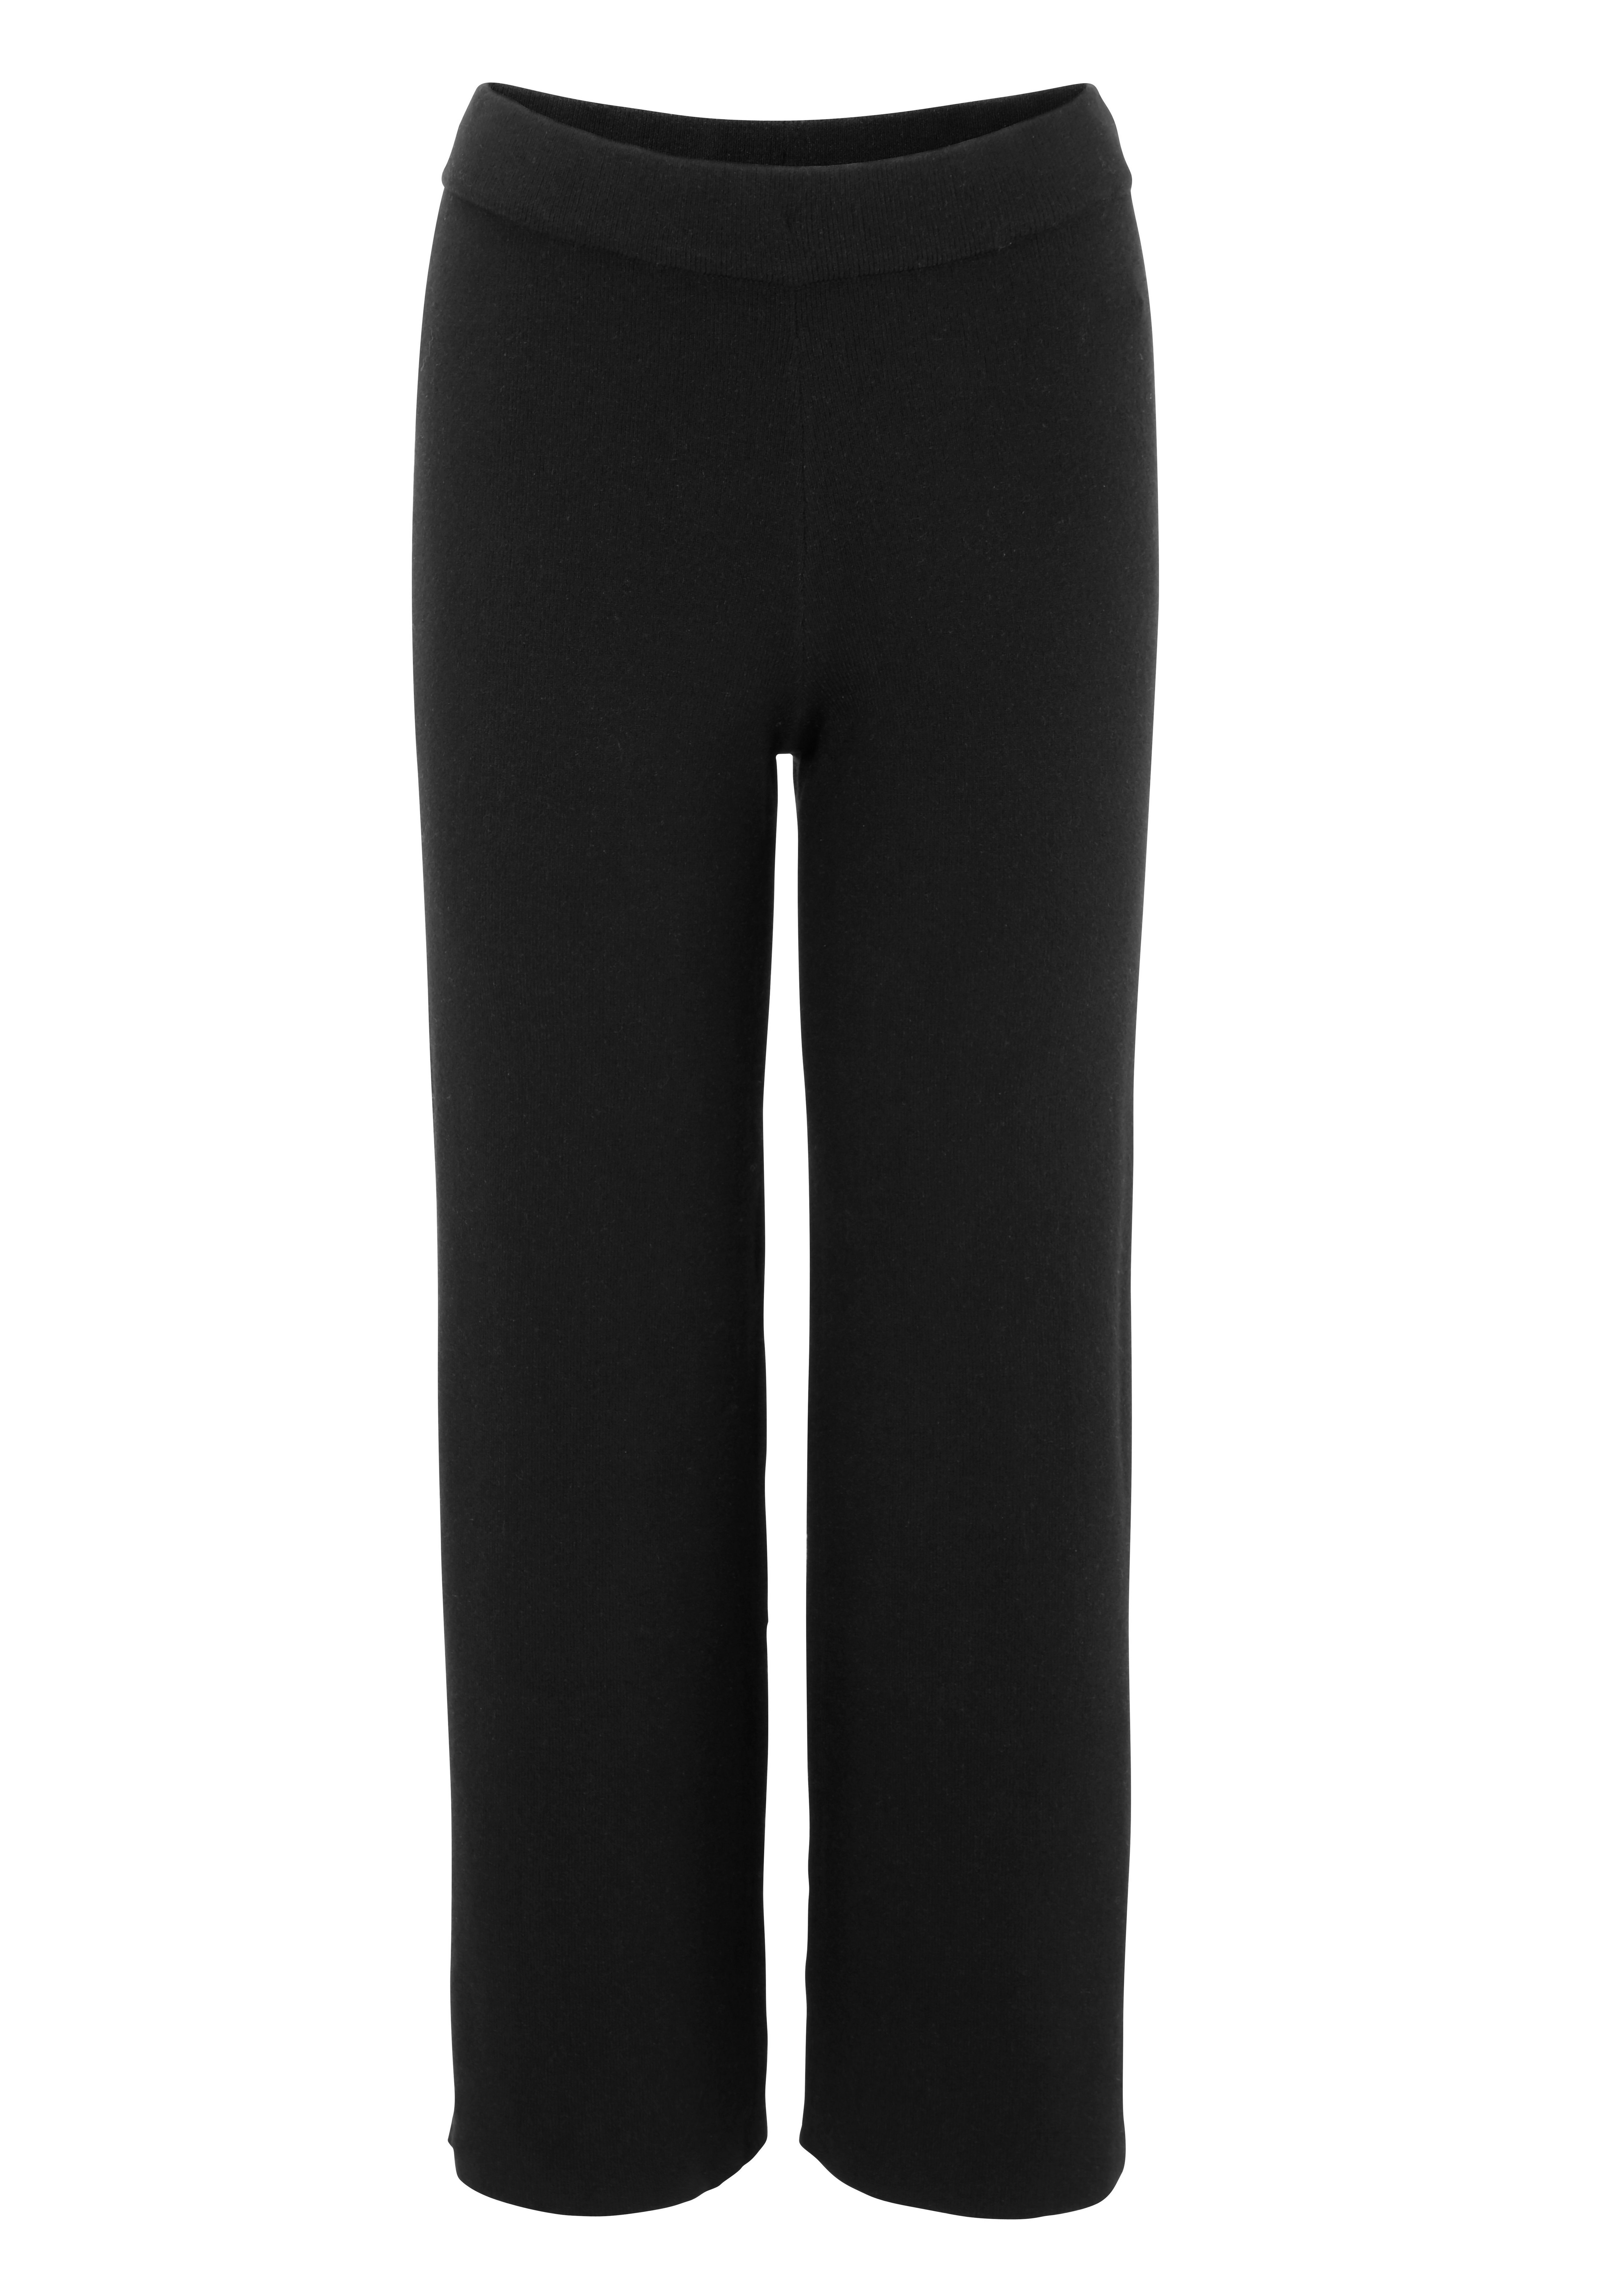 Aniston CASUAL in Culotte-Form Strickhose schwarz trendiger